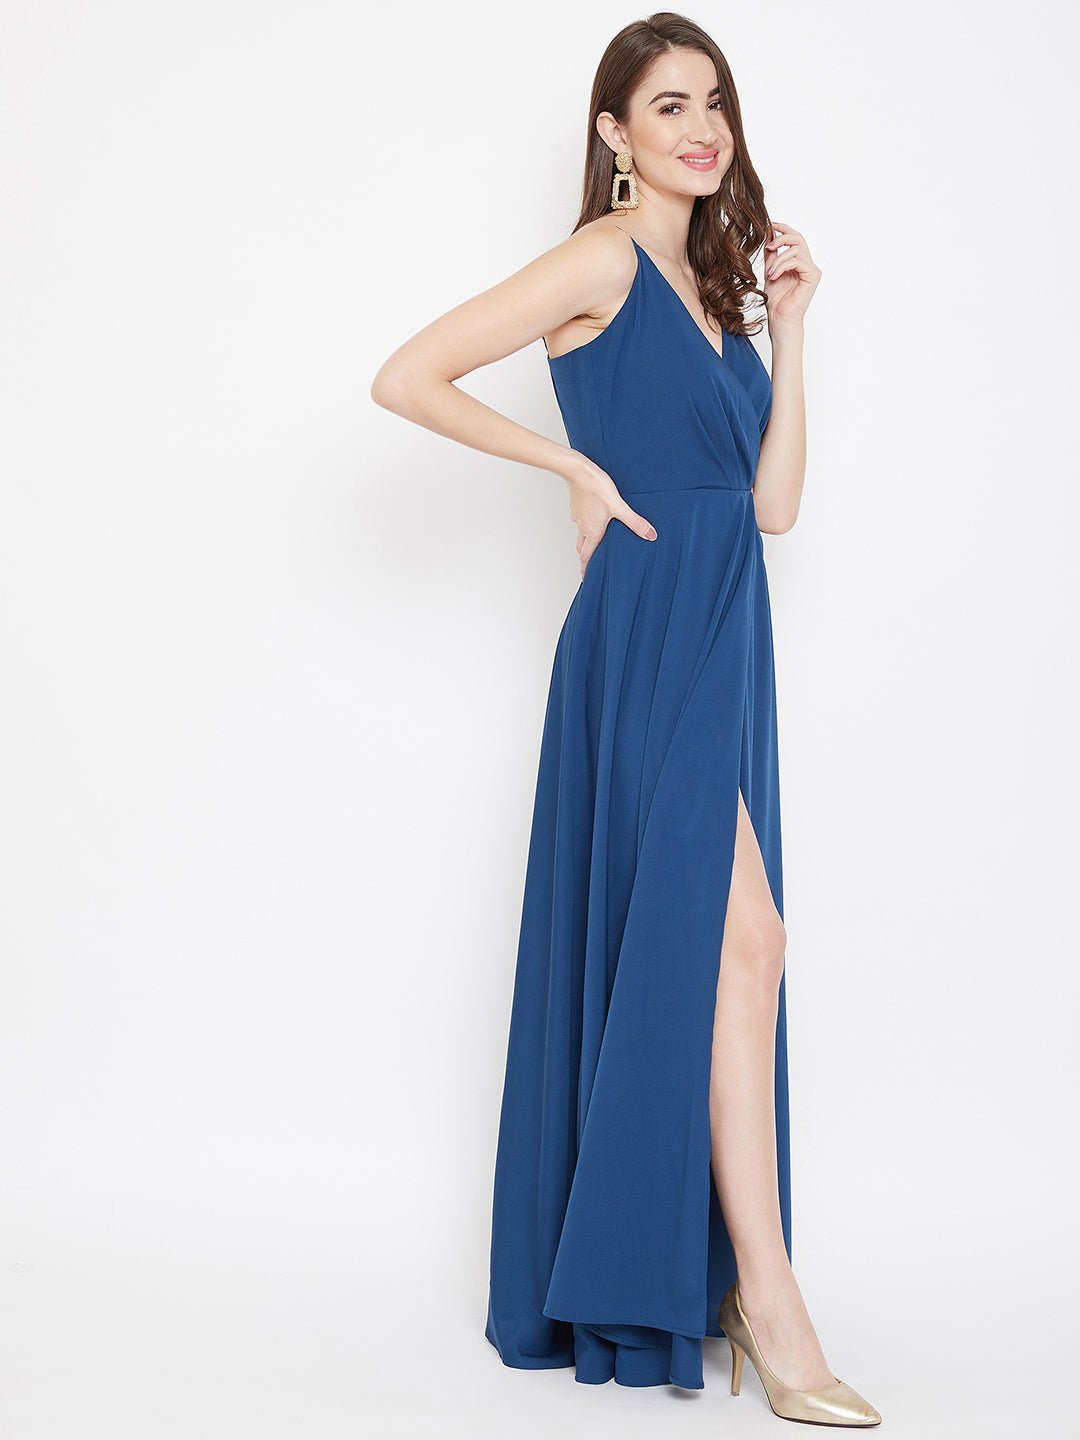 Folk Republic Women Solid Blue V-Neck Sleeveless Crepe Thigh-High Slit A-Line Maxi Dress - #folk republic#